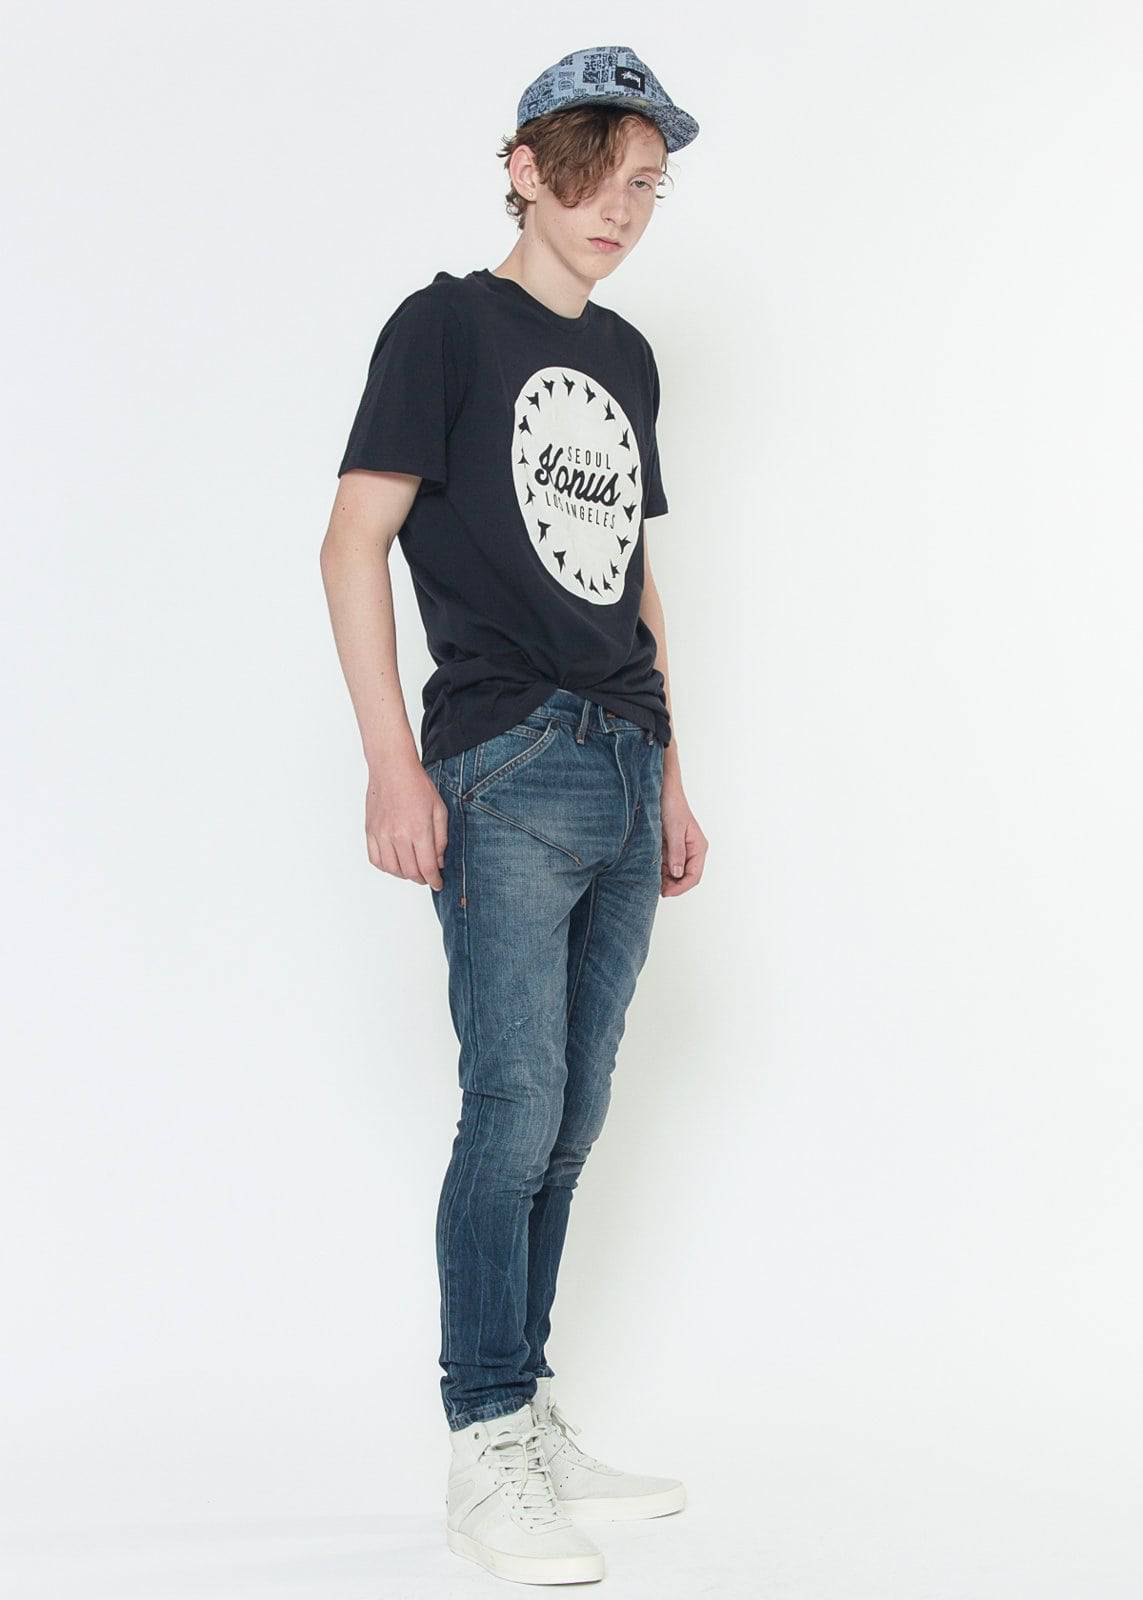 Konus Men's Essential Slim Jeans in Indigo by Shop at Konus